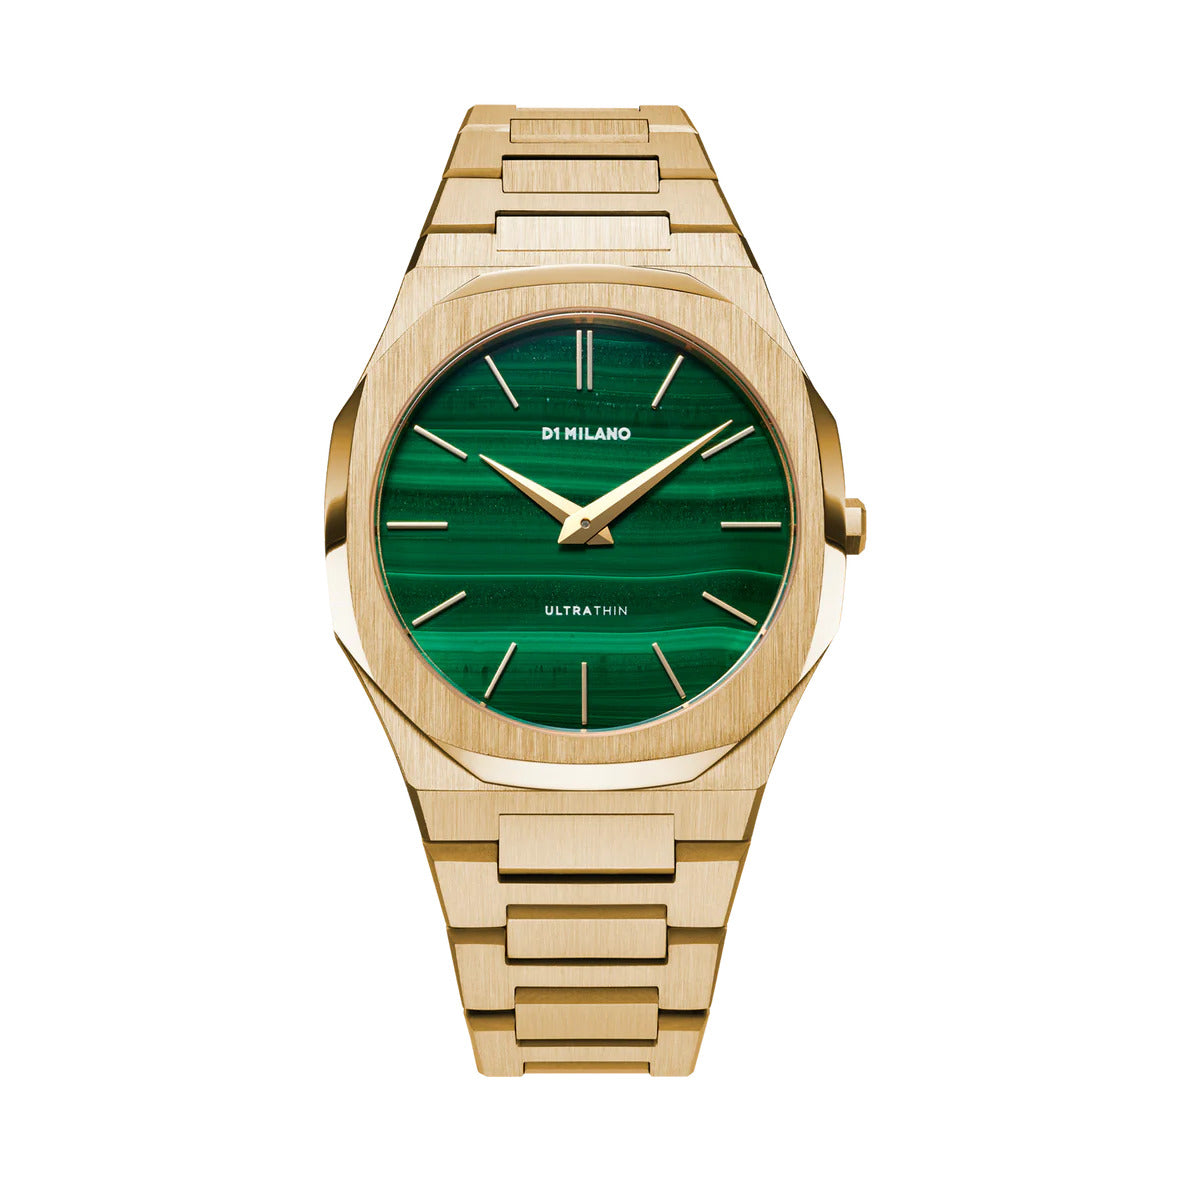 D1 Milano Men's Watch, Quartz Movement, Green Dial - ML-0305